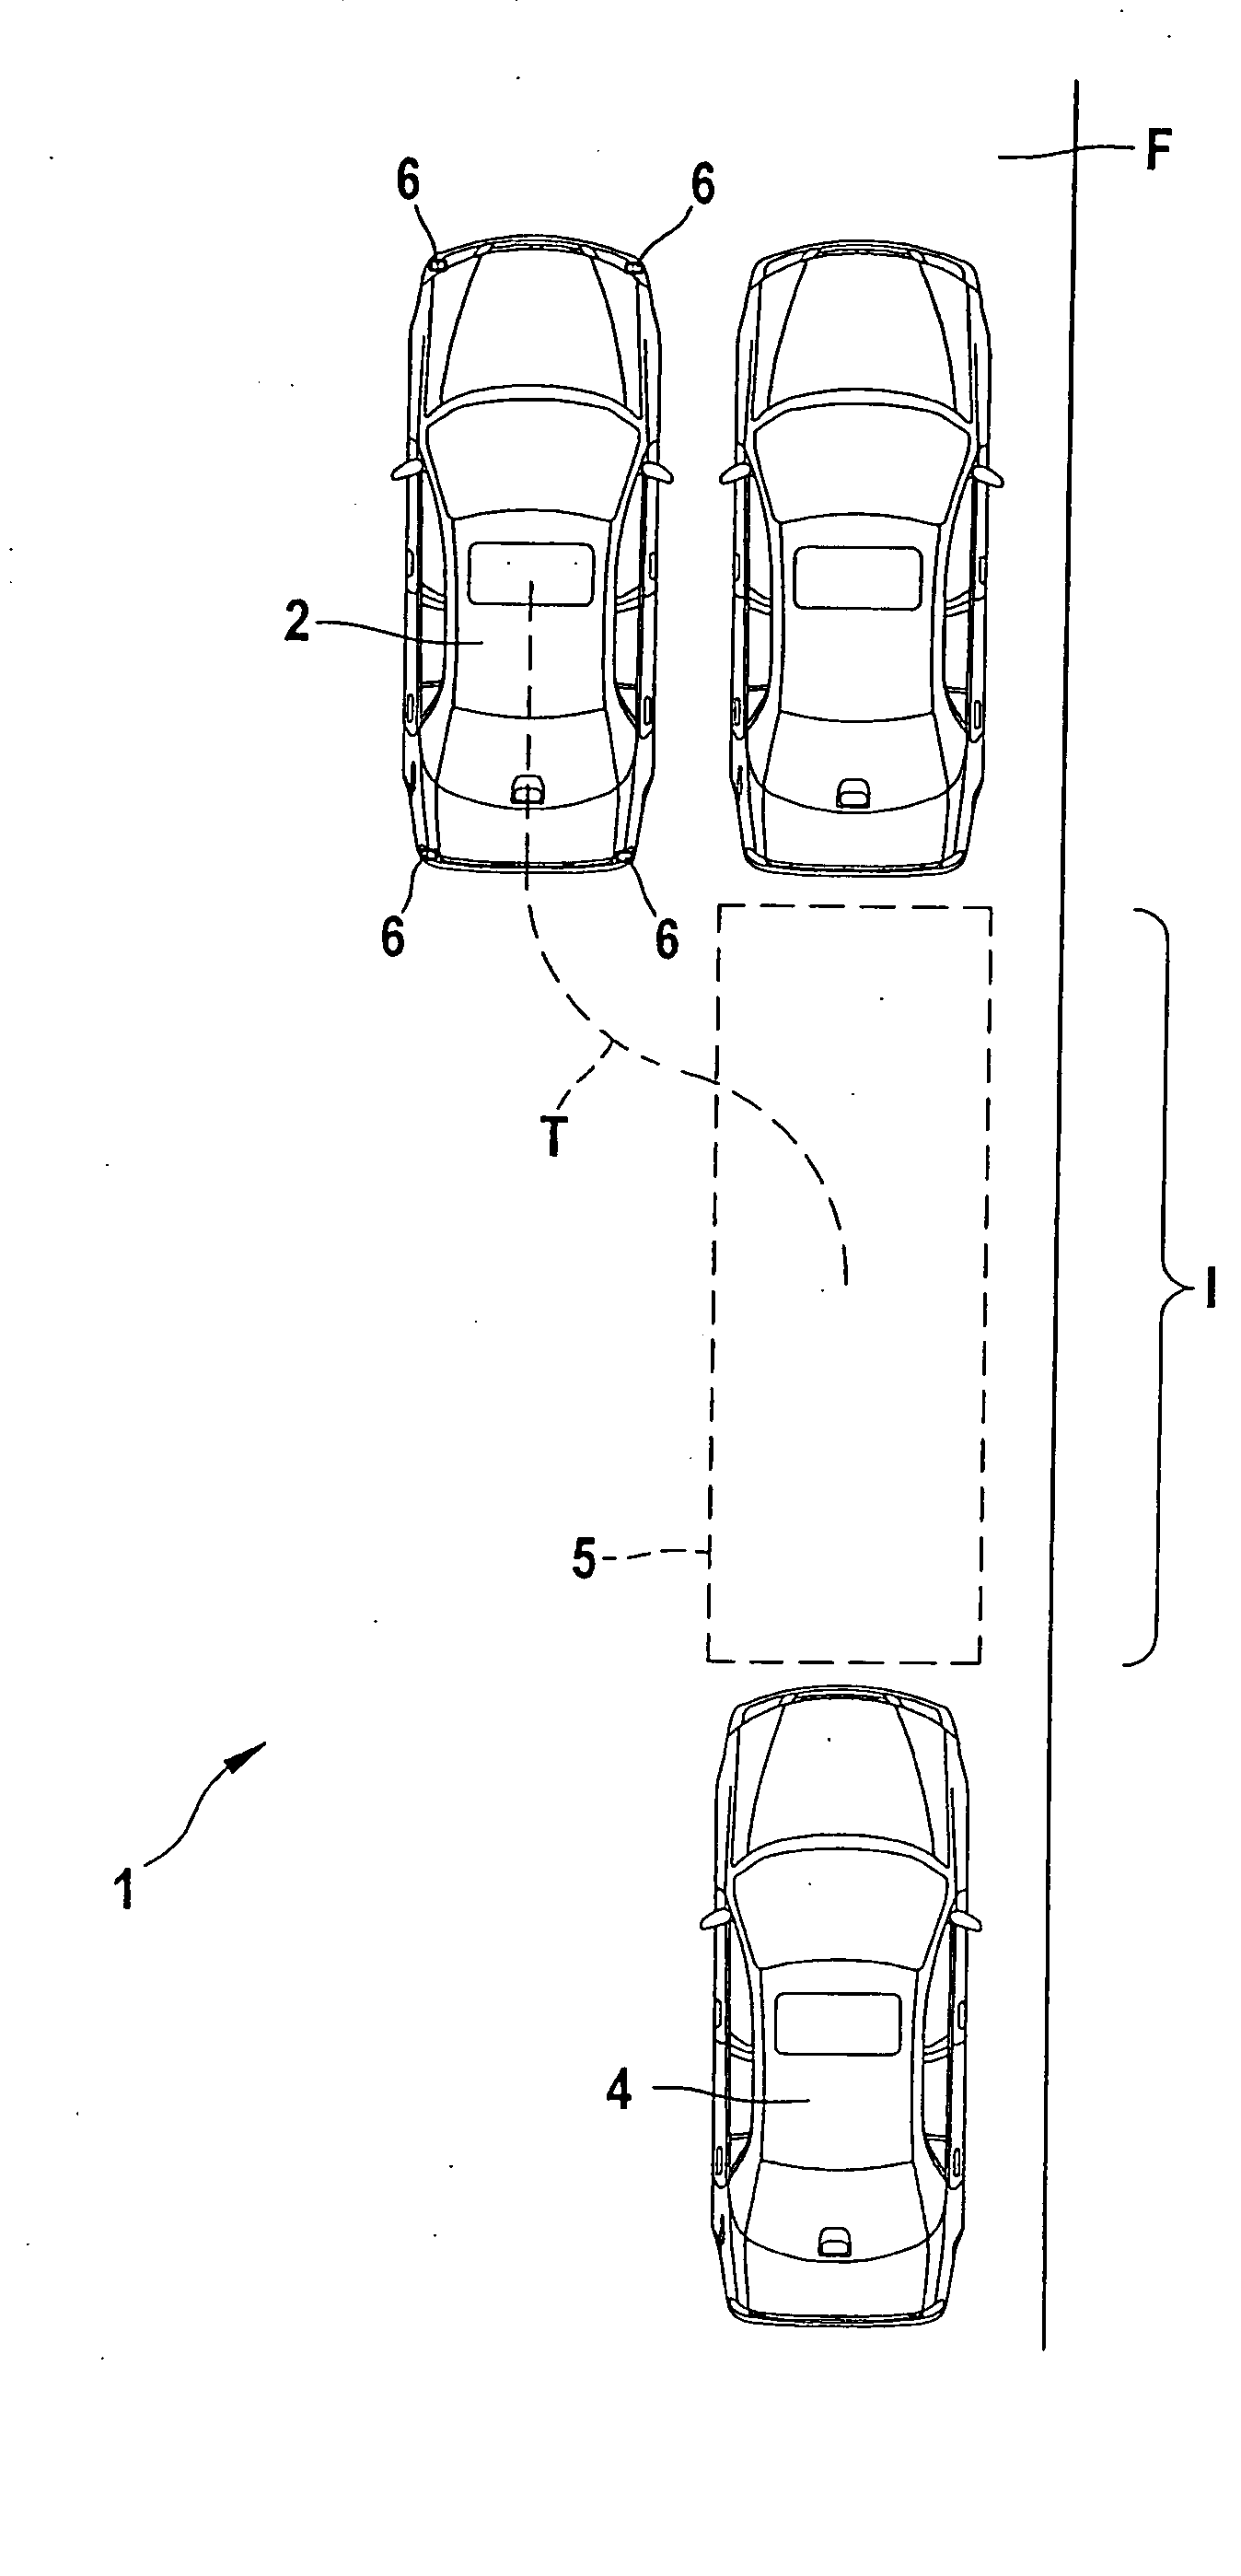 Method for Determining a Parking Spot